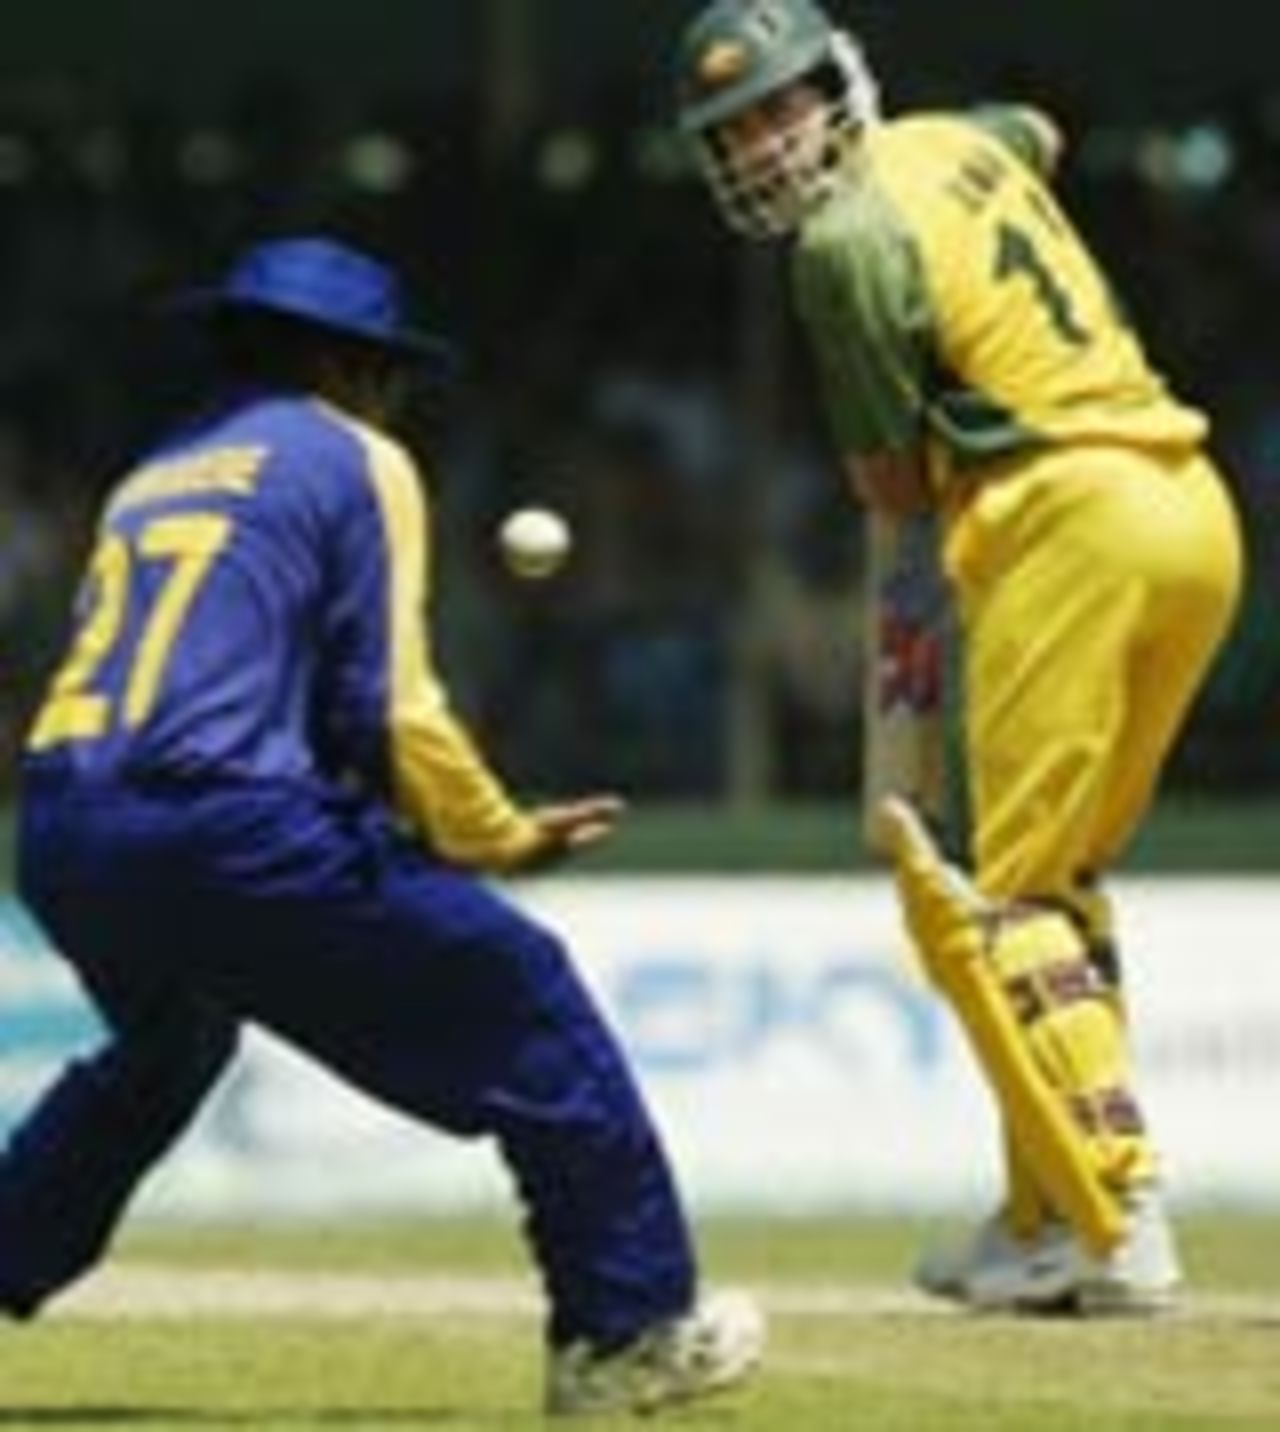 Michael Bevan edges to slip, Sri Lanka v Australia, 5th ODI, Colombo, February 29, 2004